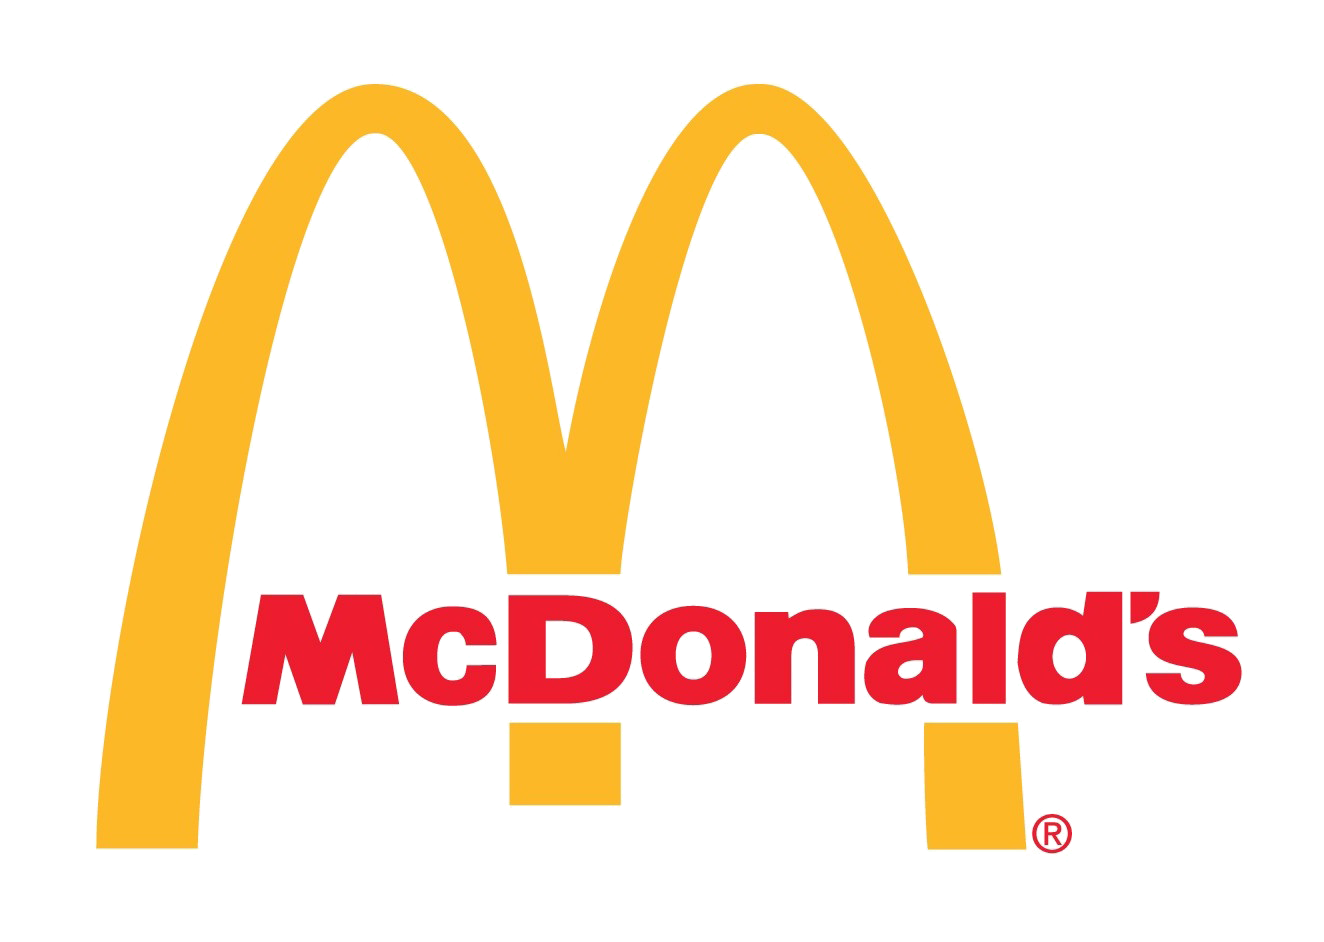  McDonalds Logo PNG Image PurePNG Free transparent CC0 